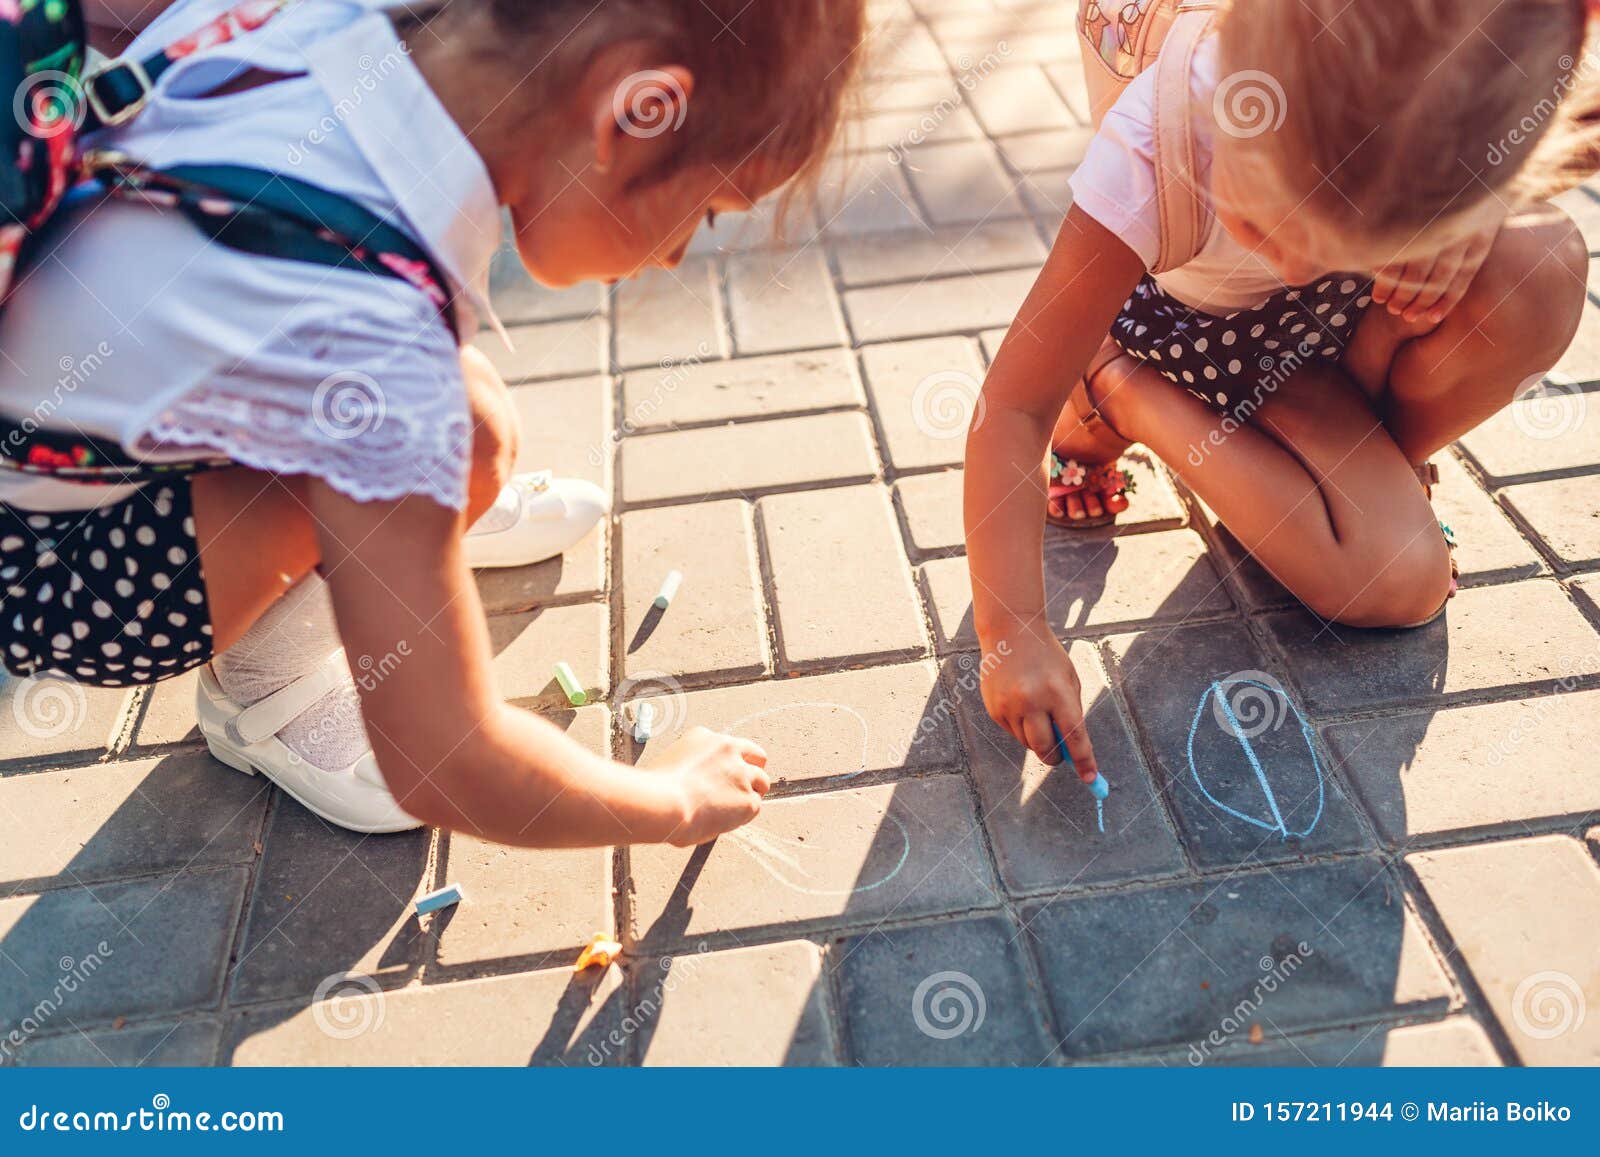 Outdoor chalk fun in the sun! | Catforth Primary School